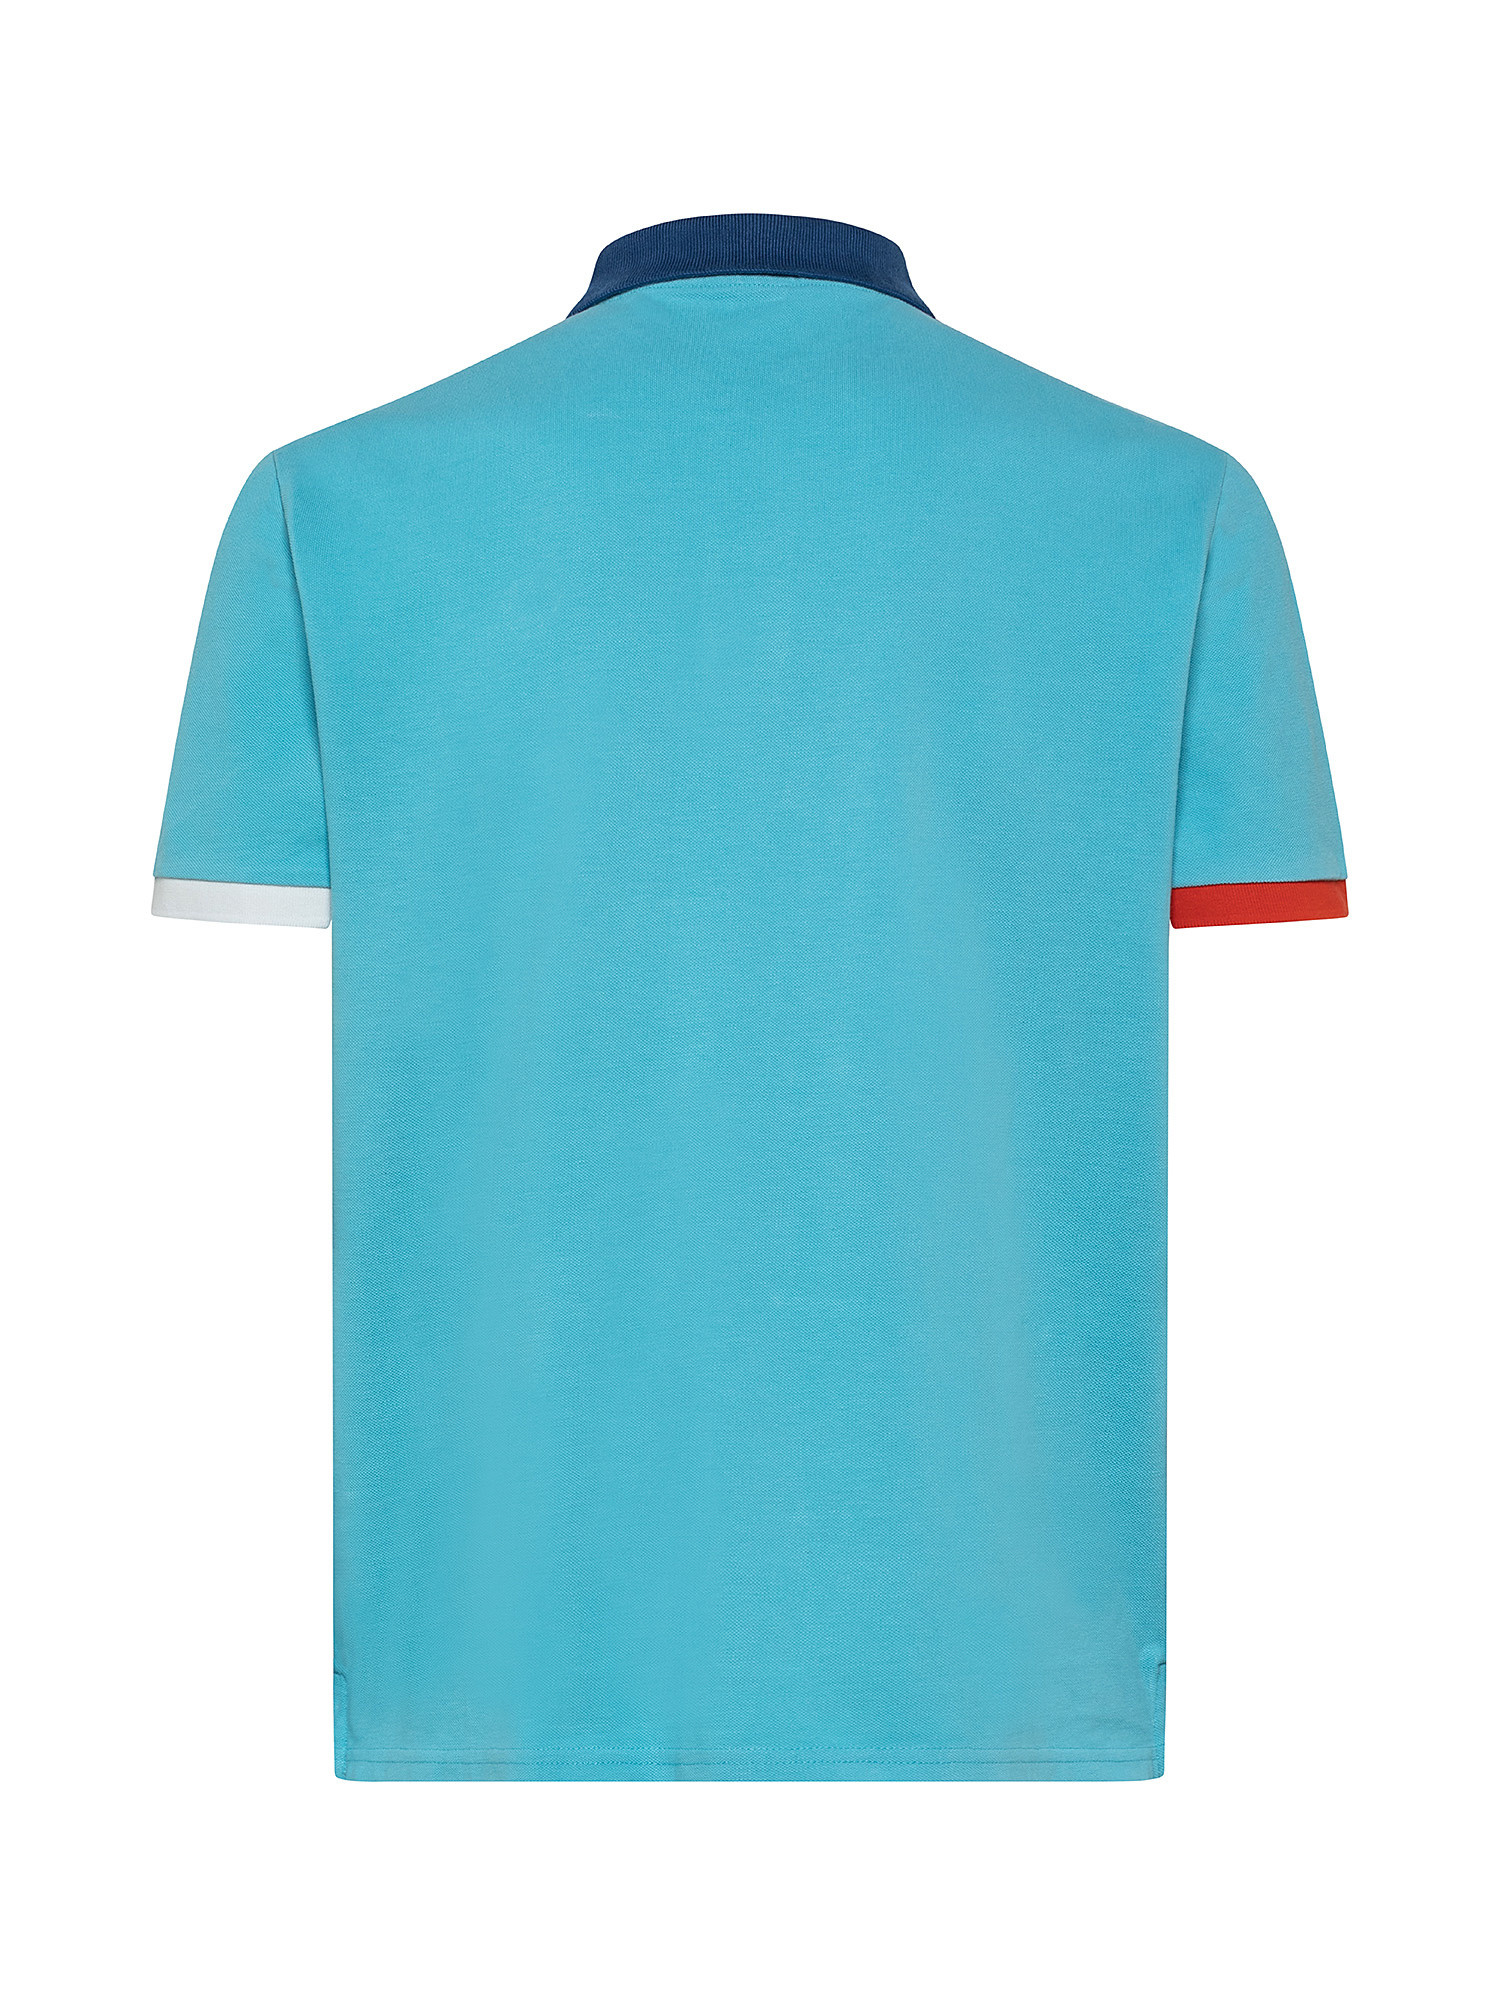 Polo manica corta con logo, Blu, large image number 1